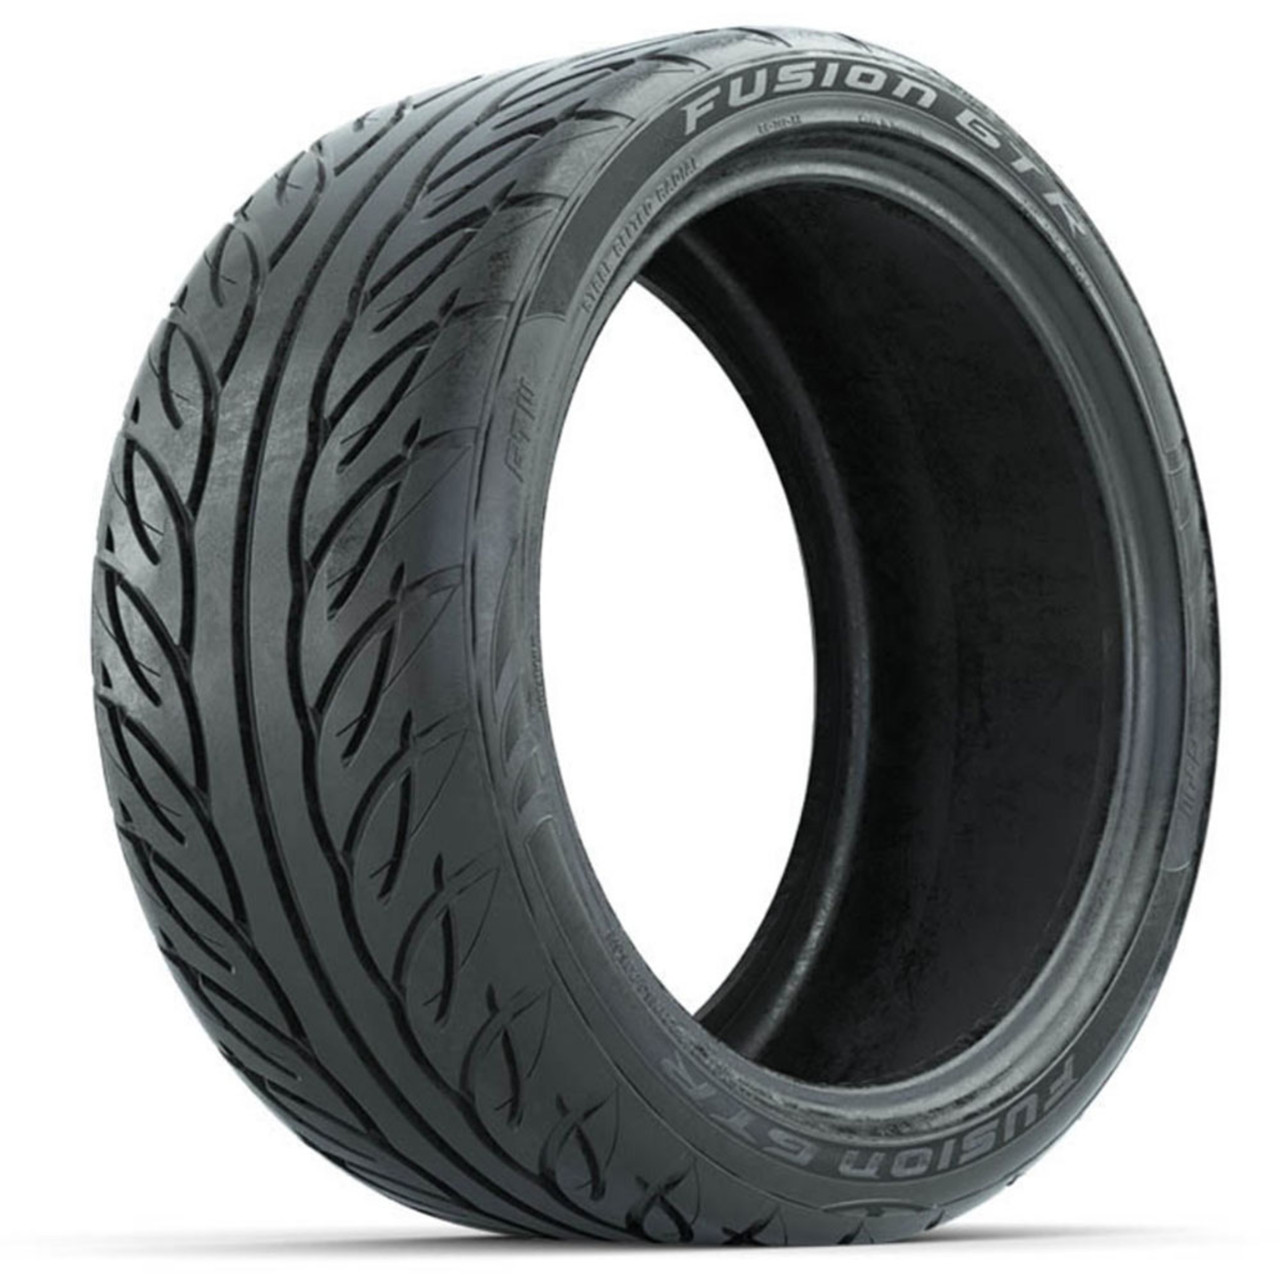 215/40-R15 GTW® Fusion GTR Steel Belted Street Tire
Item # 20-073